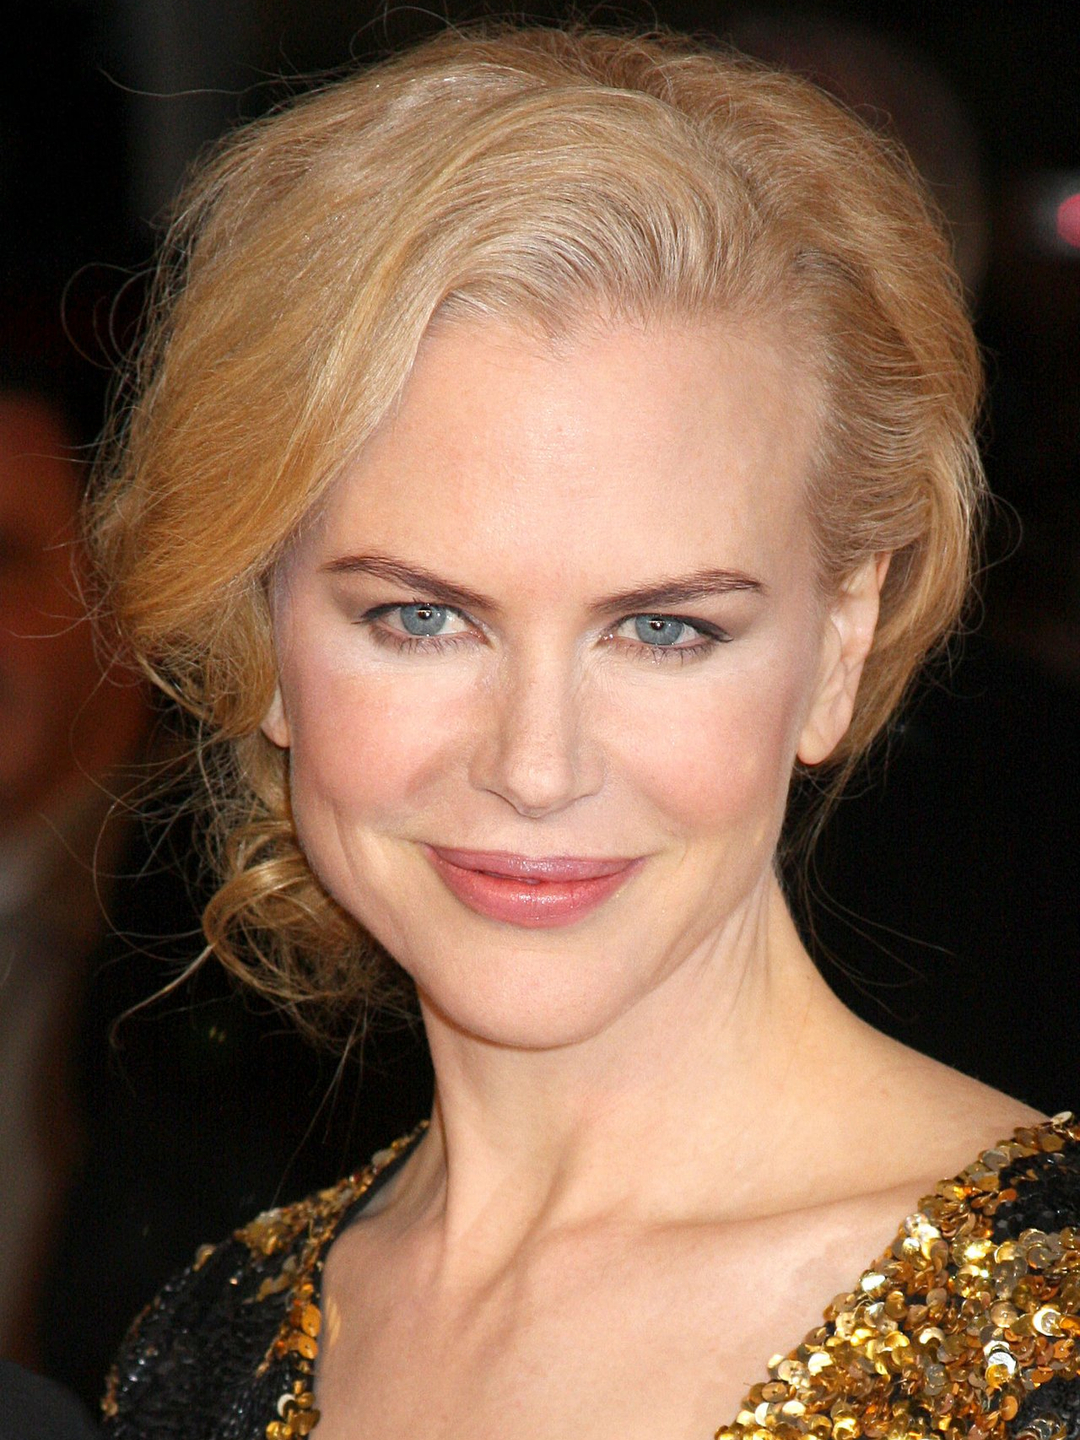 Nicole Kidman who is her father